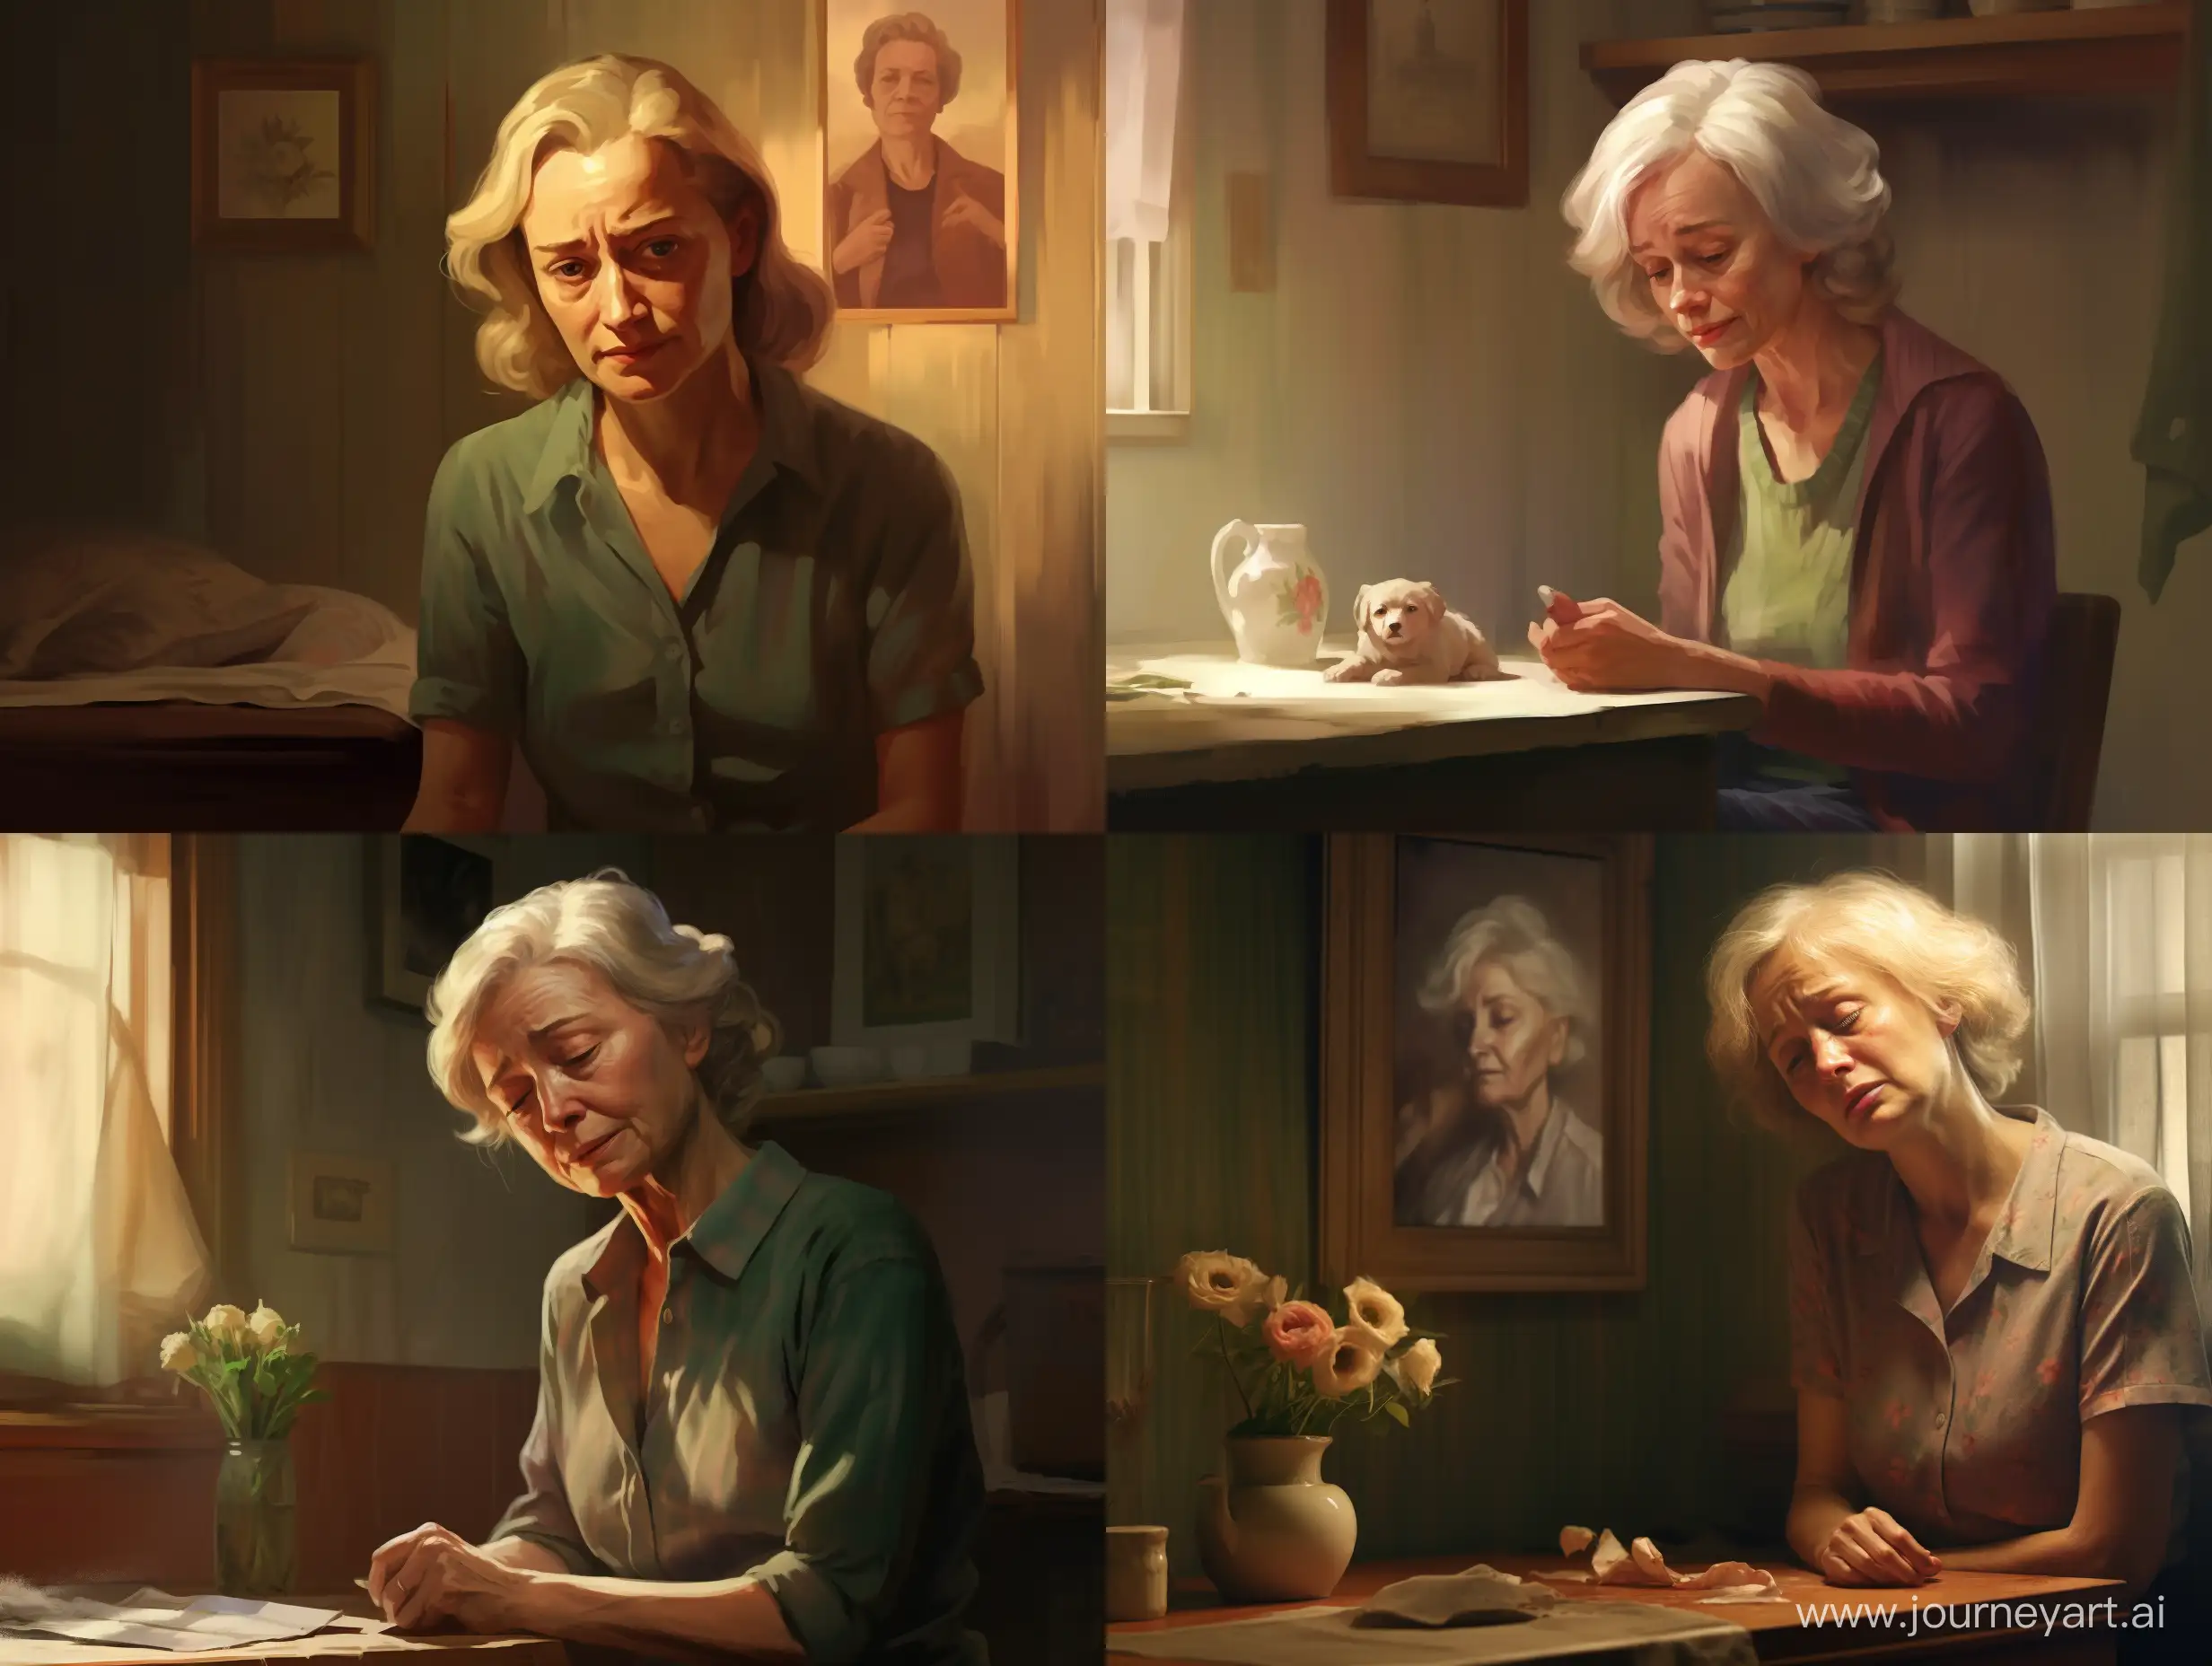 Emotional-Blonde-Woman-in-Nostalgic-Setting-with-Smiling-Elderly-Portrait